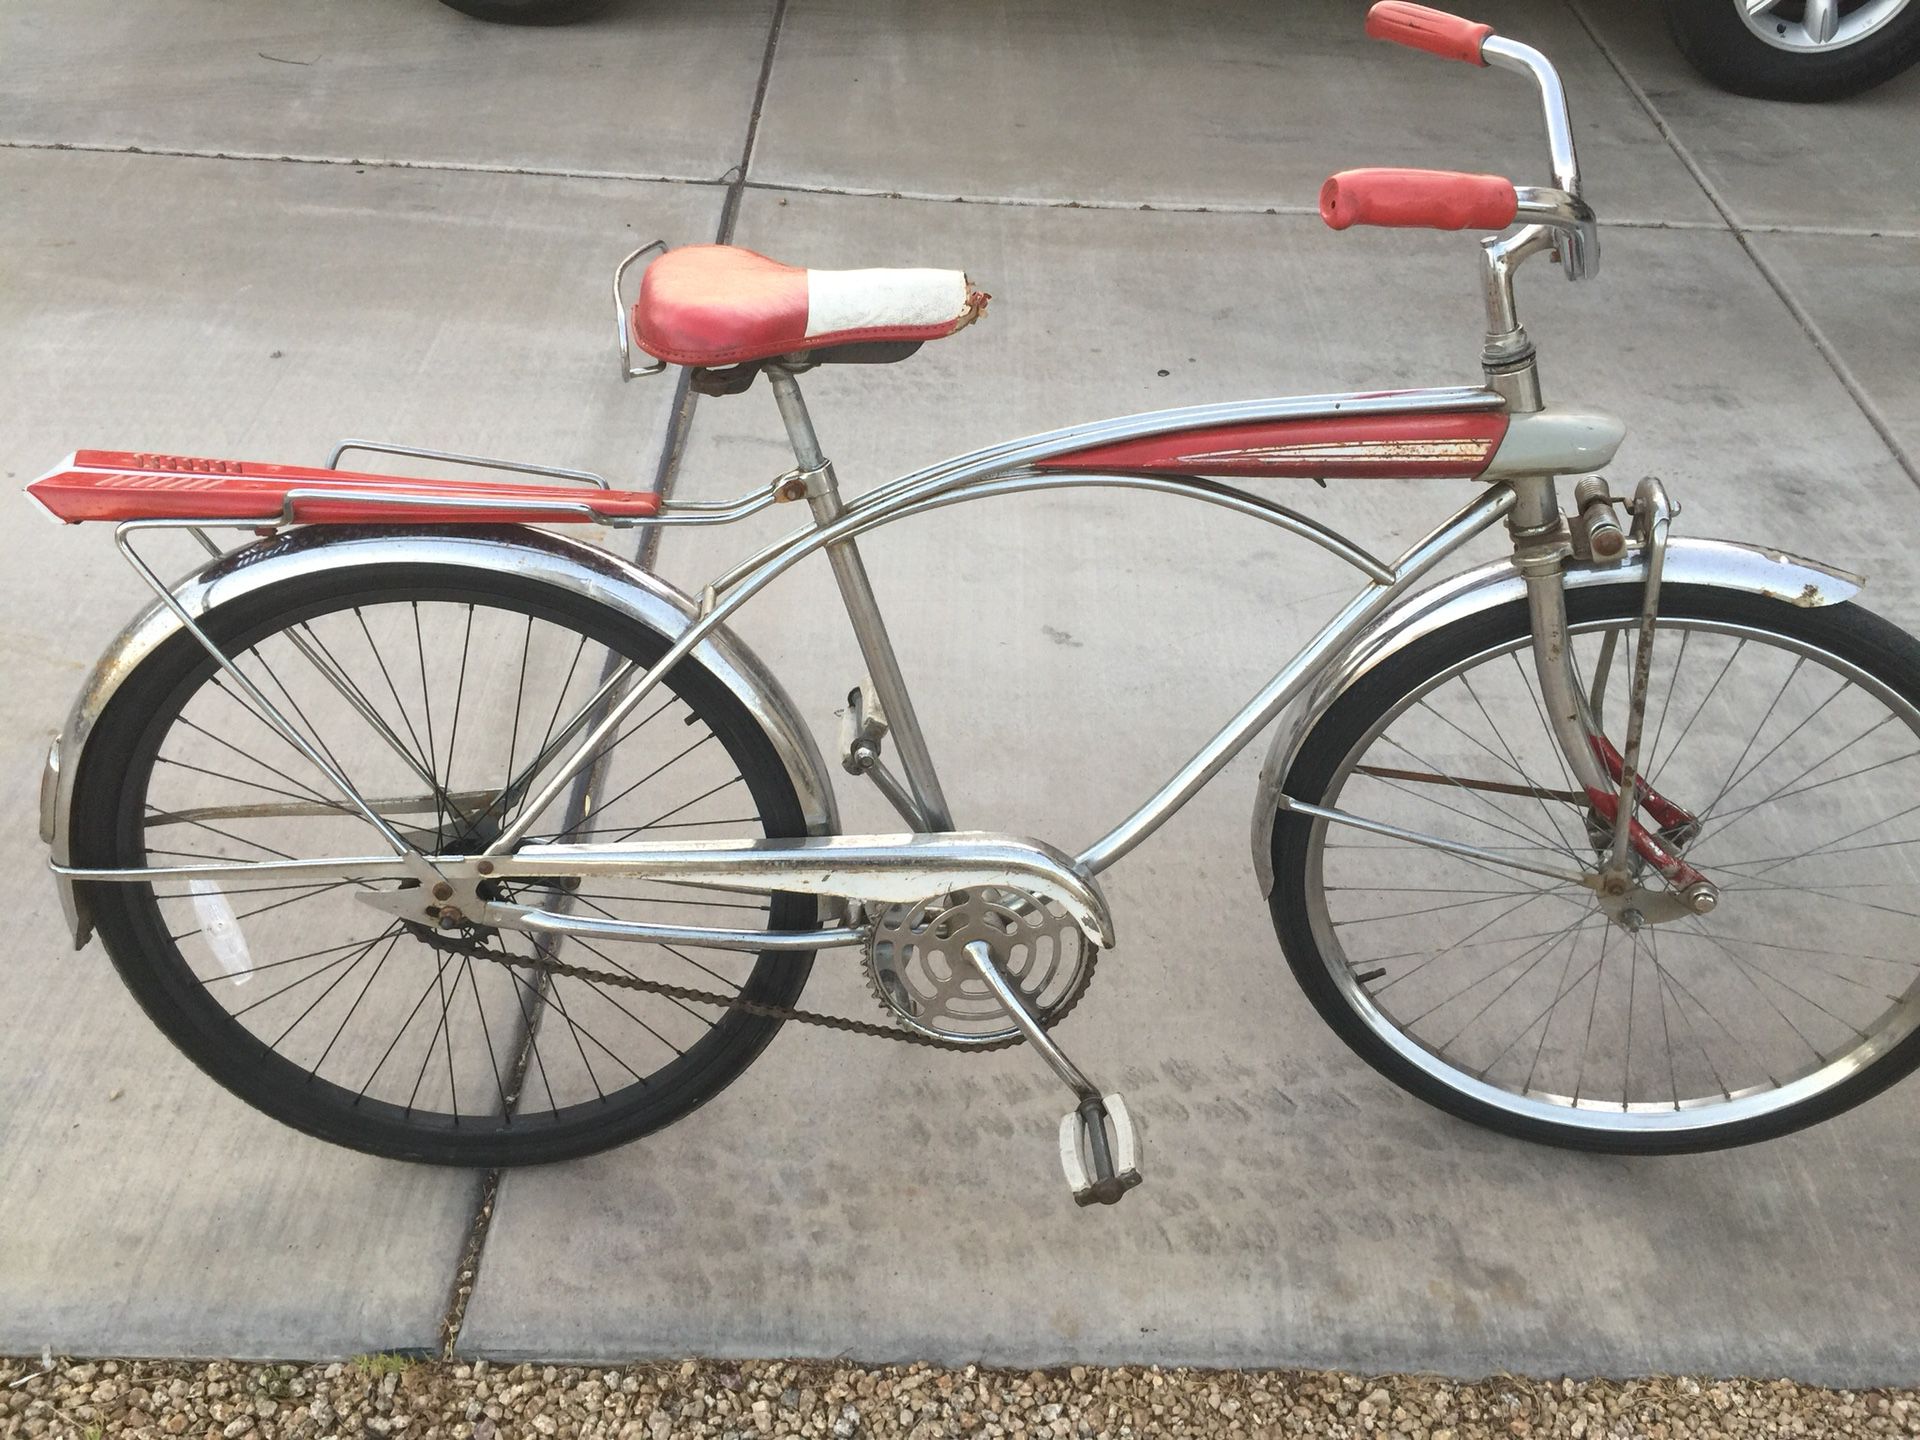 1962 JC Higgins cruiser bike mostly original